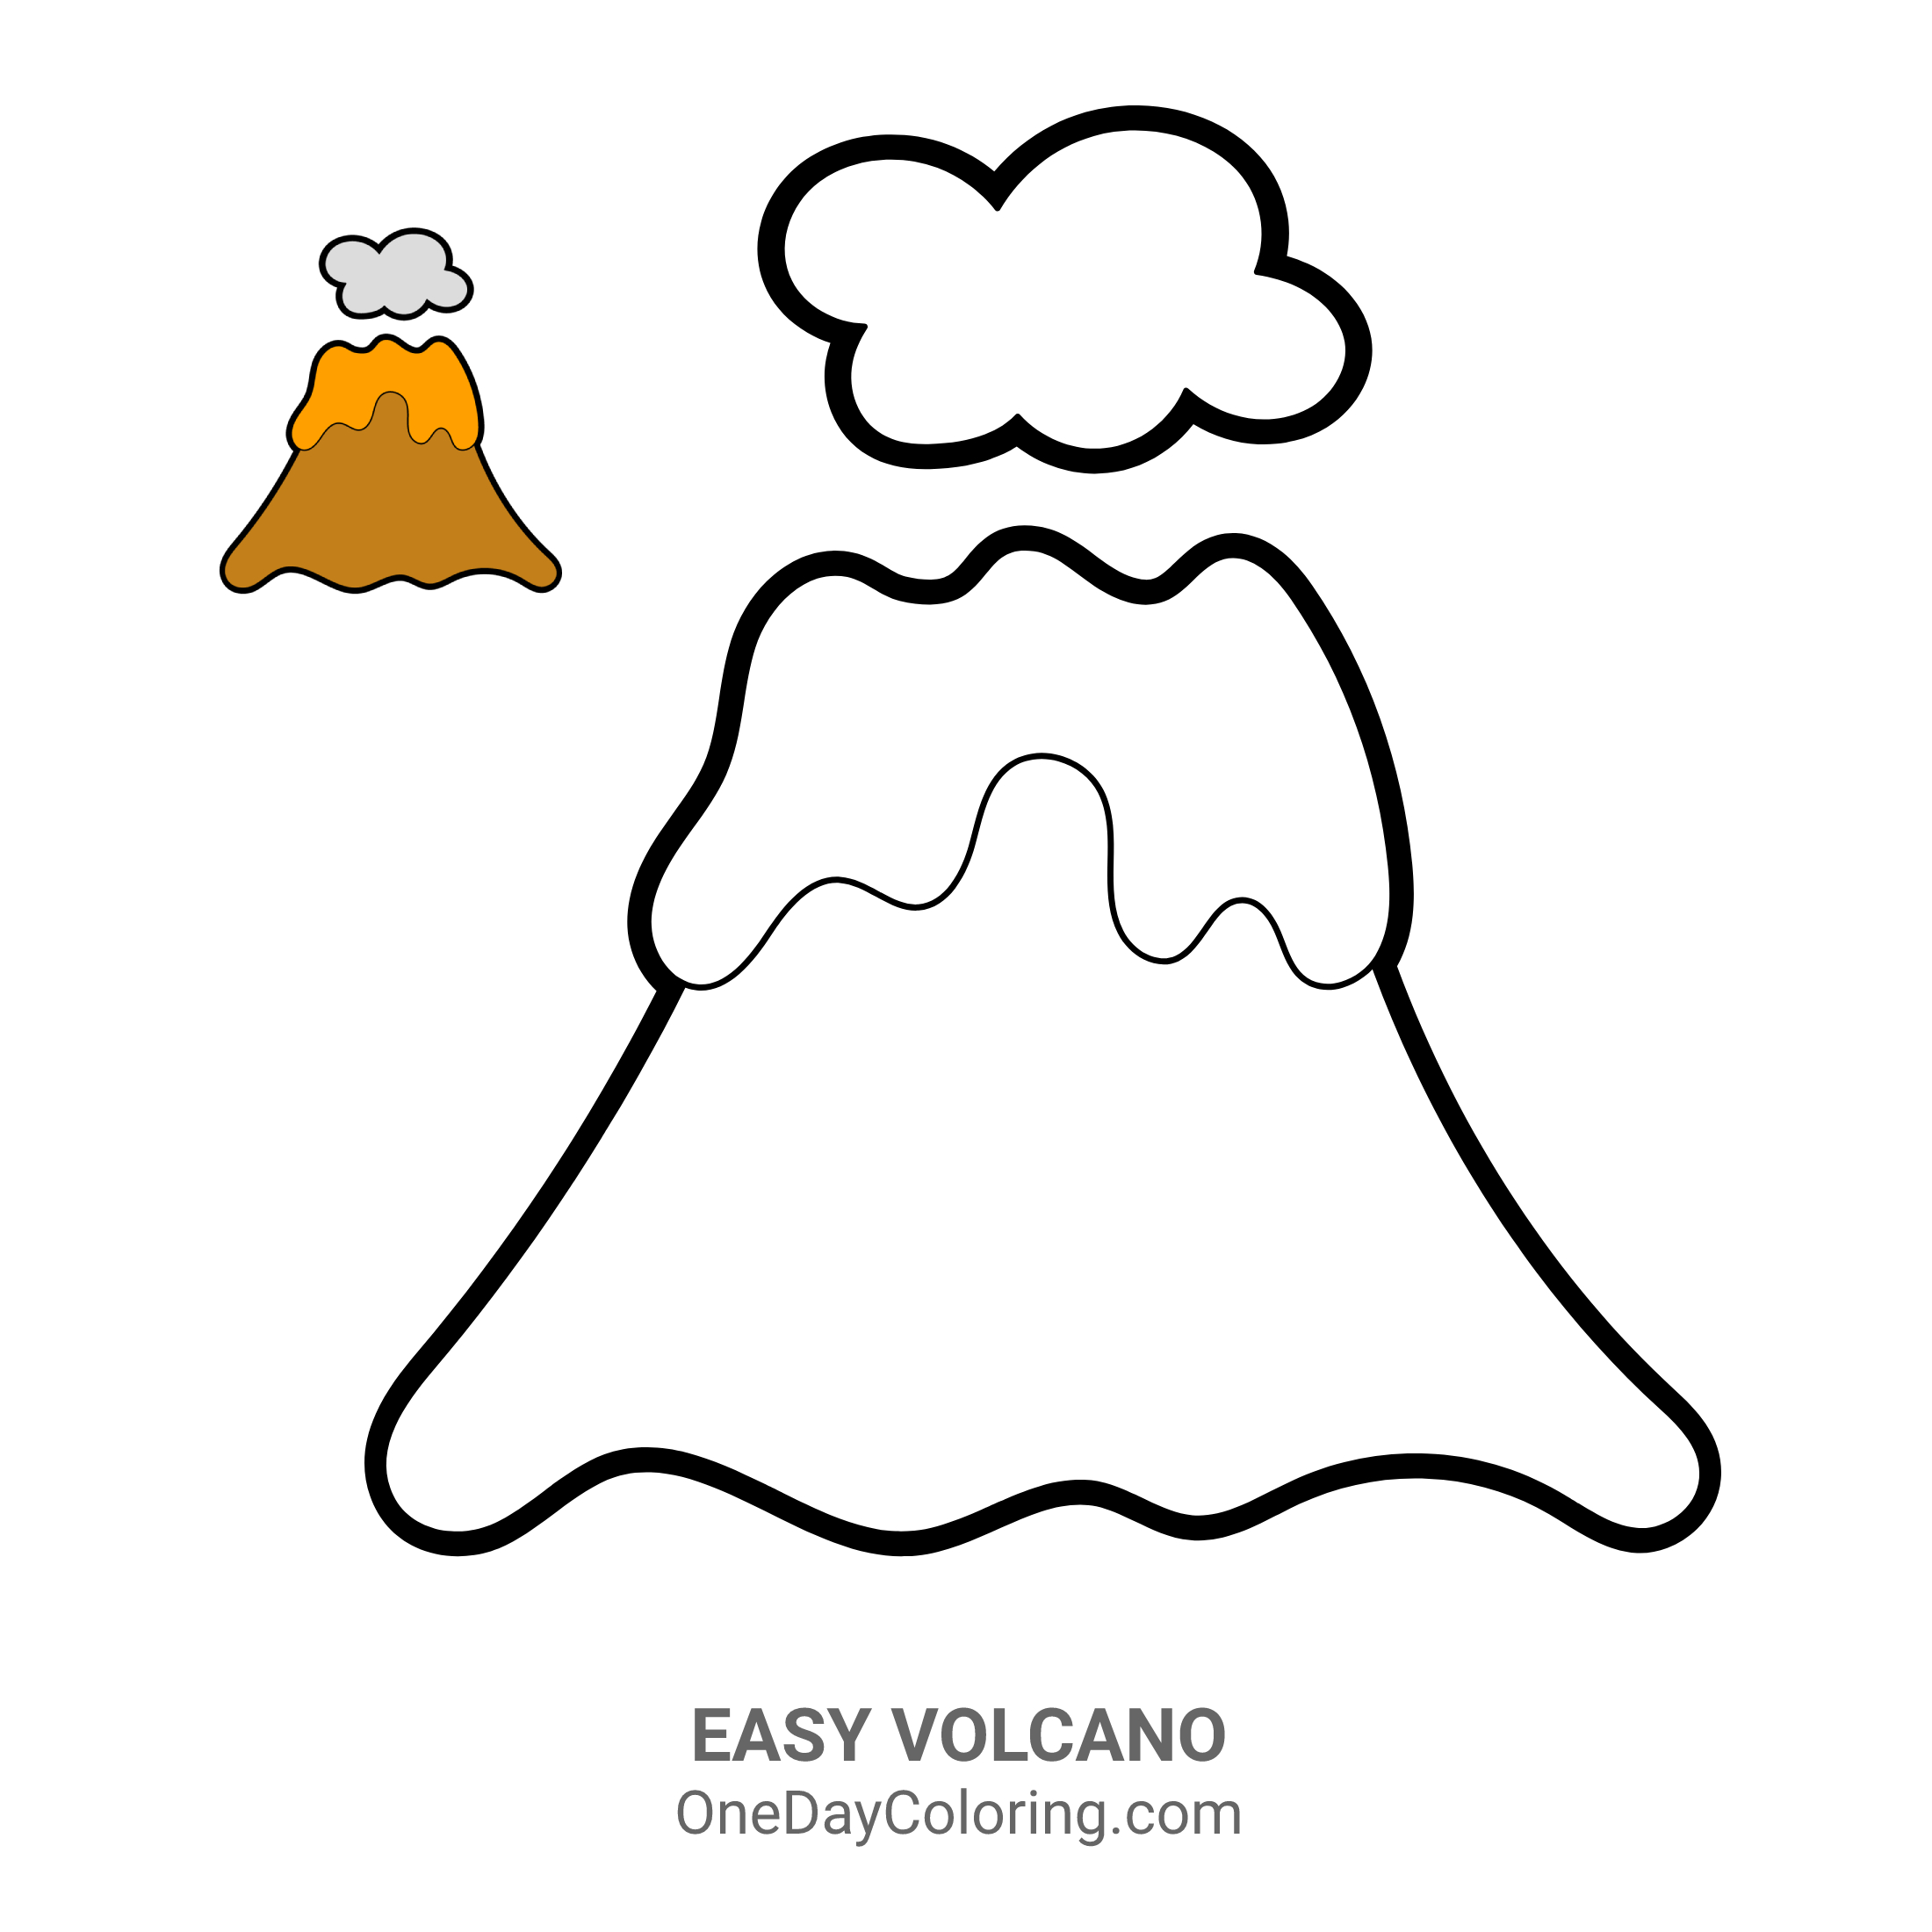 Premium Vector | Volcano cute drawing for school flash card